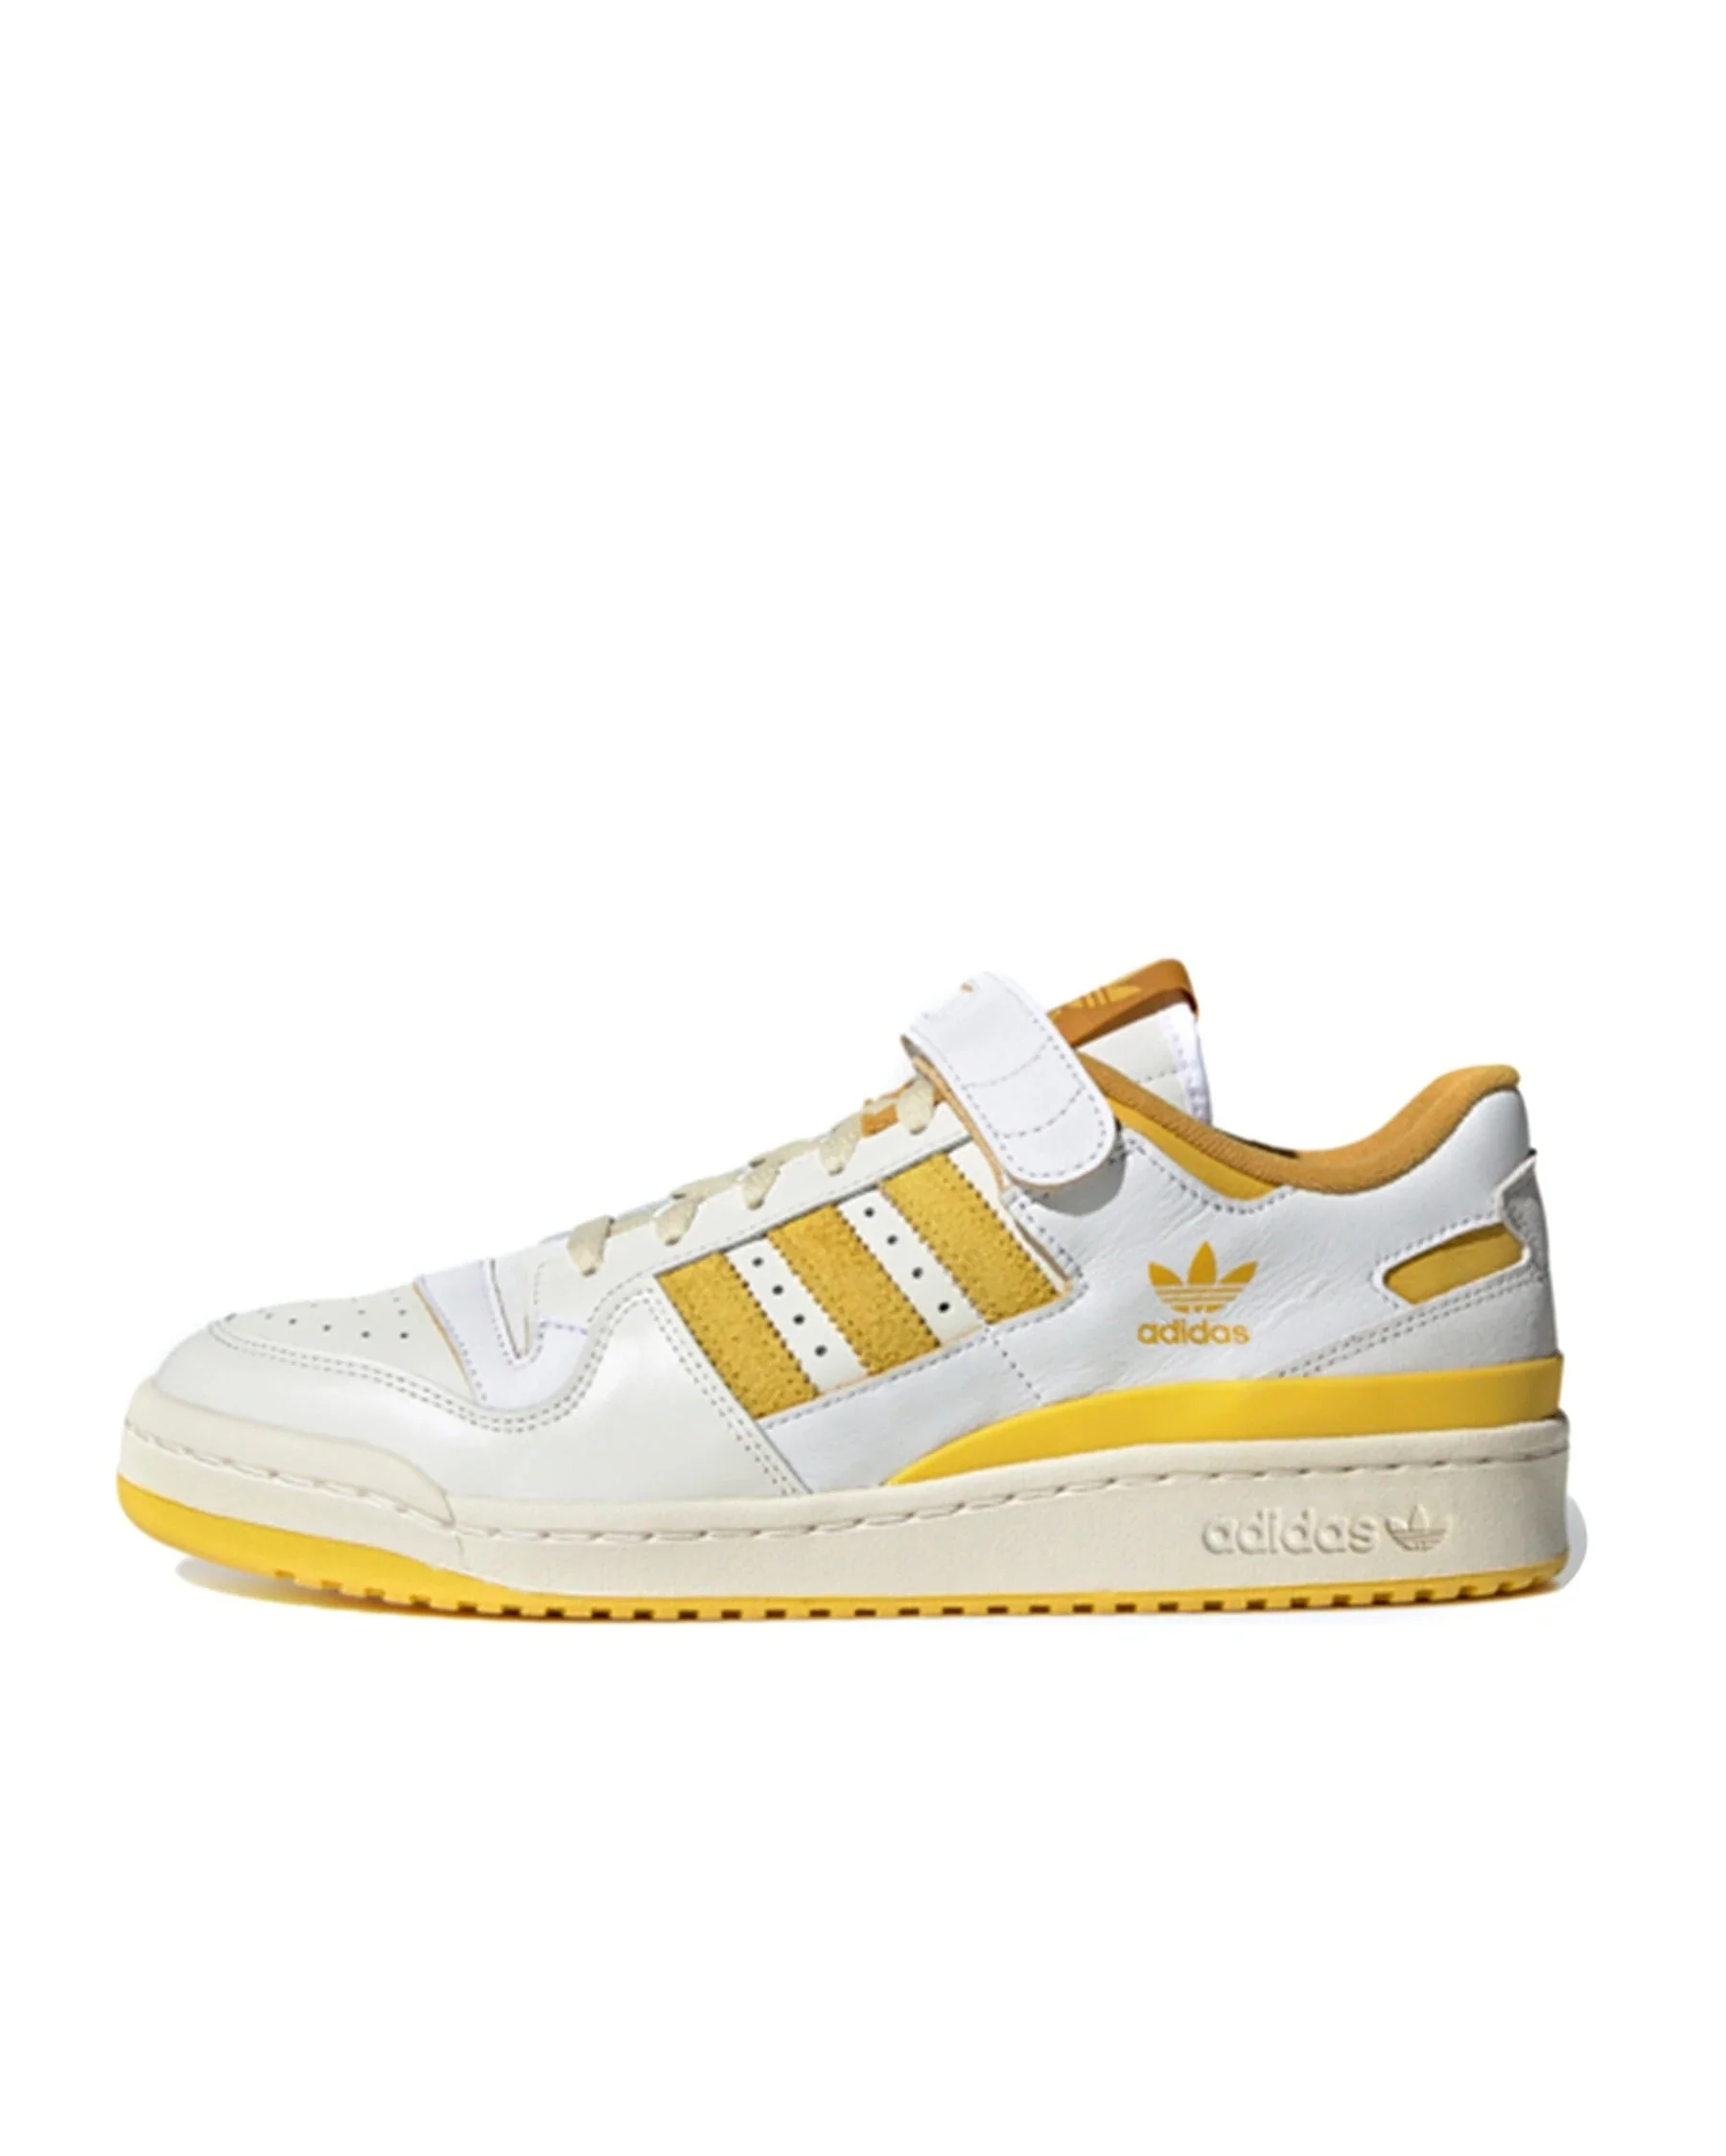 Adidas Originals Forum 84 Low In White Yellow